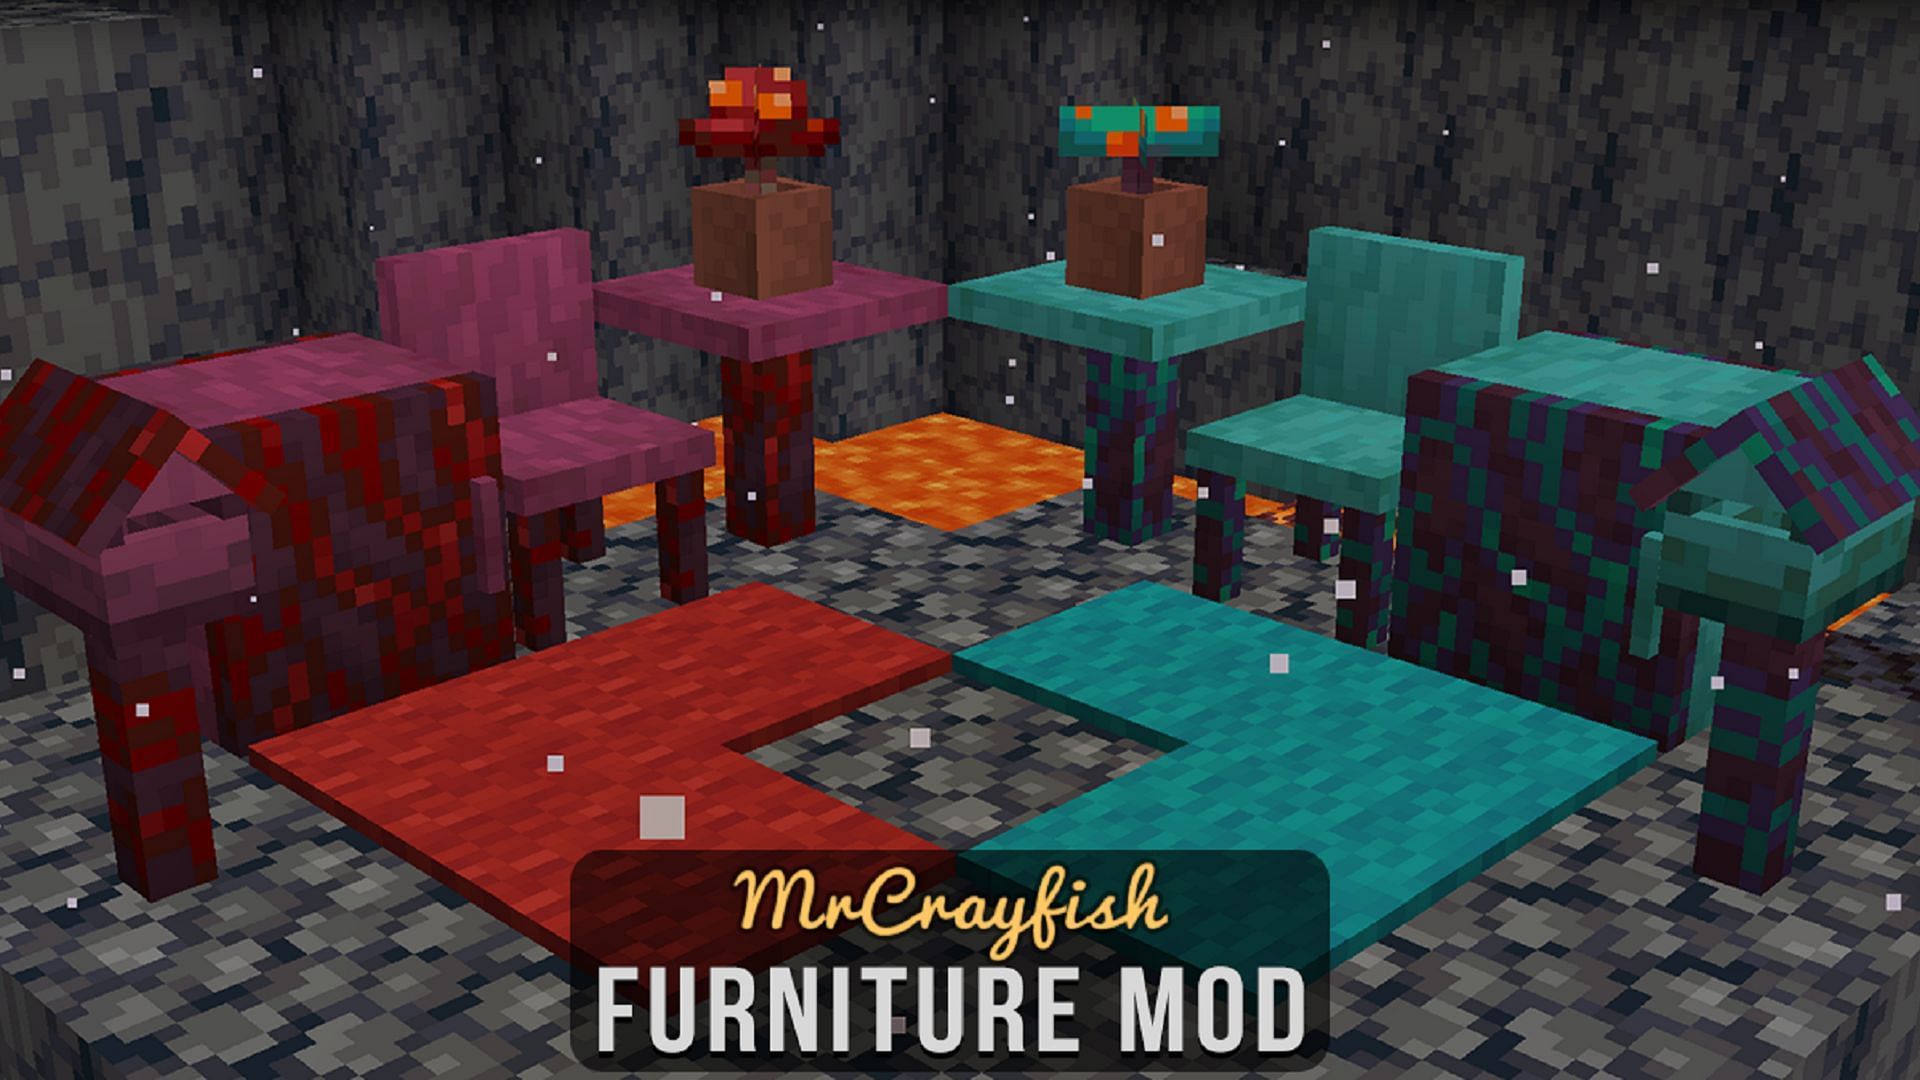 Crimson/Warped Fungus furniture in MrCrayfish&#039;s Furniture Mod (Image via MrCrayfish/CurseForge)